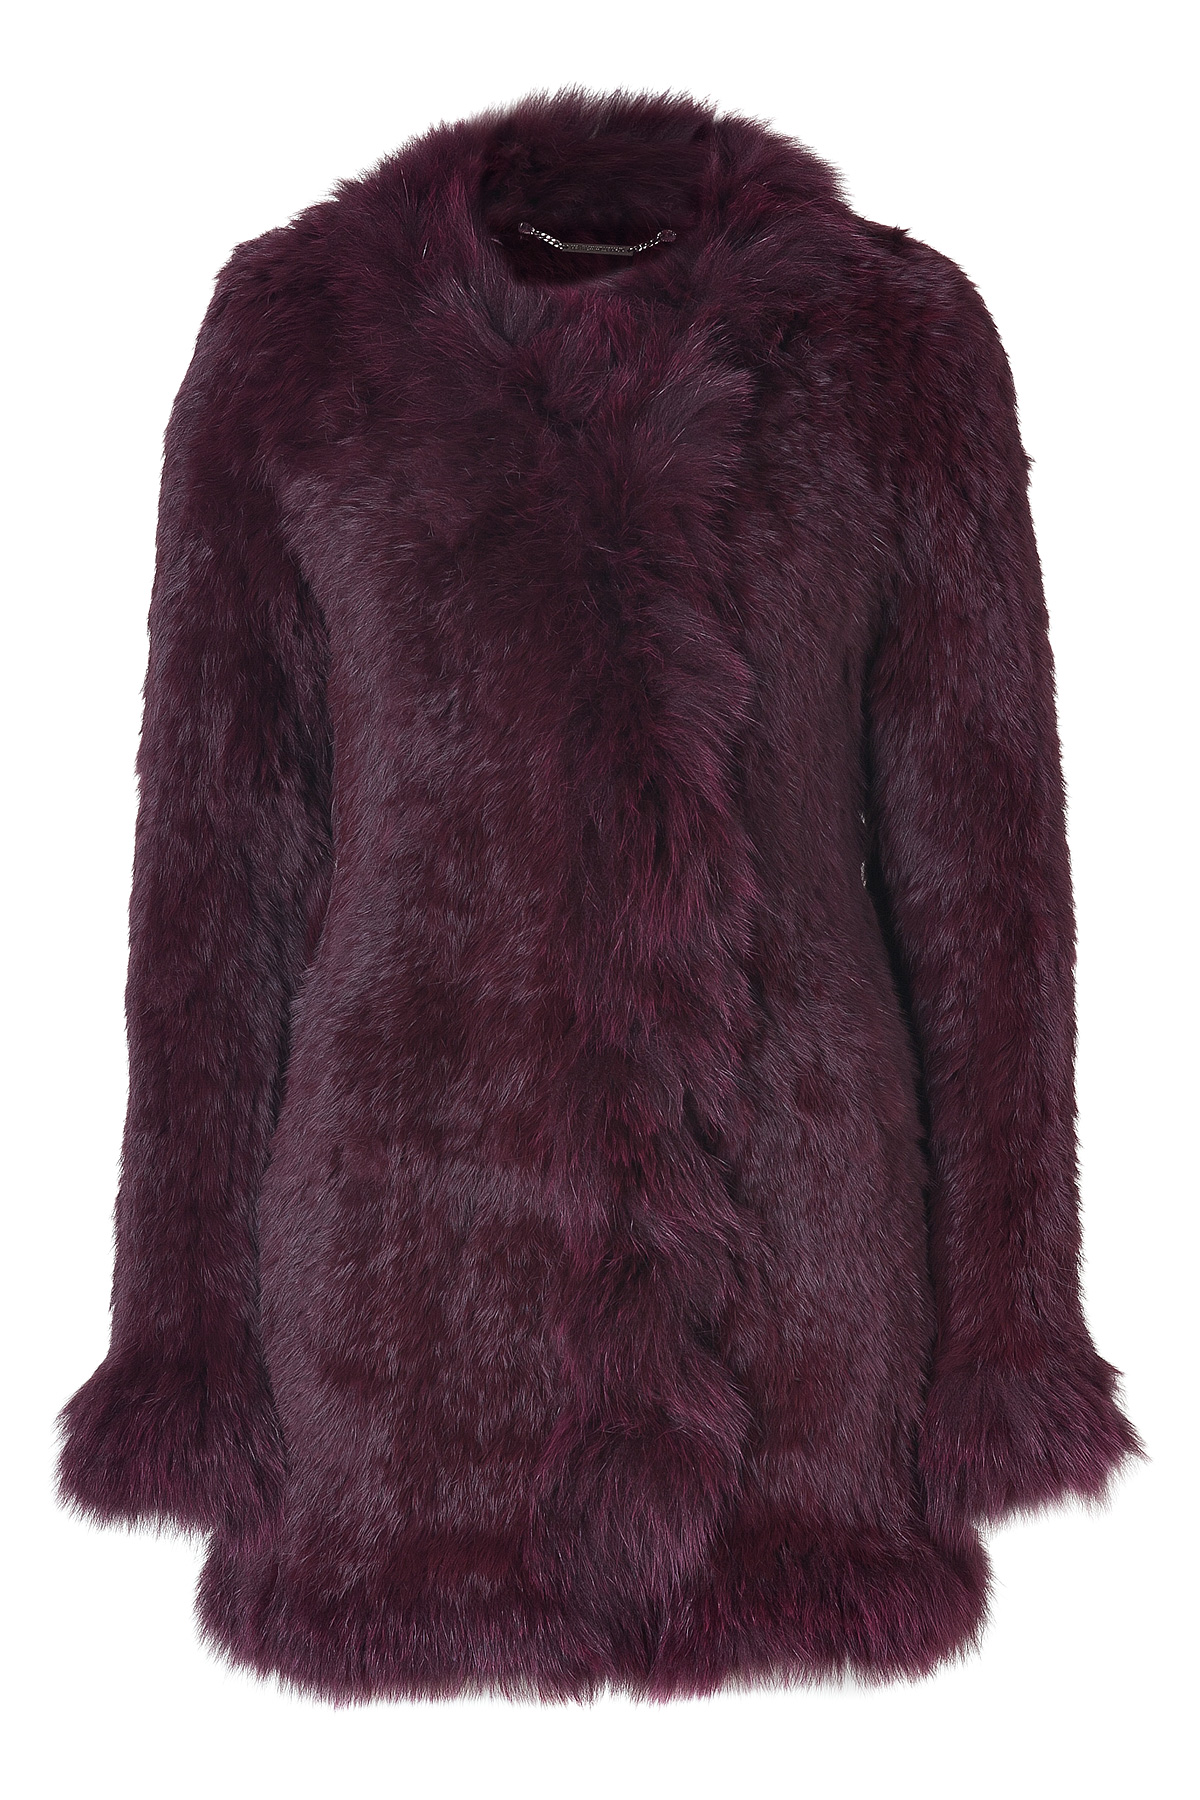 Matthew williamson Berry Fur Coat in Purple | Lyst